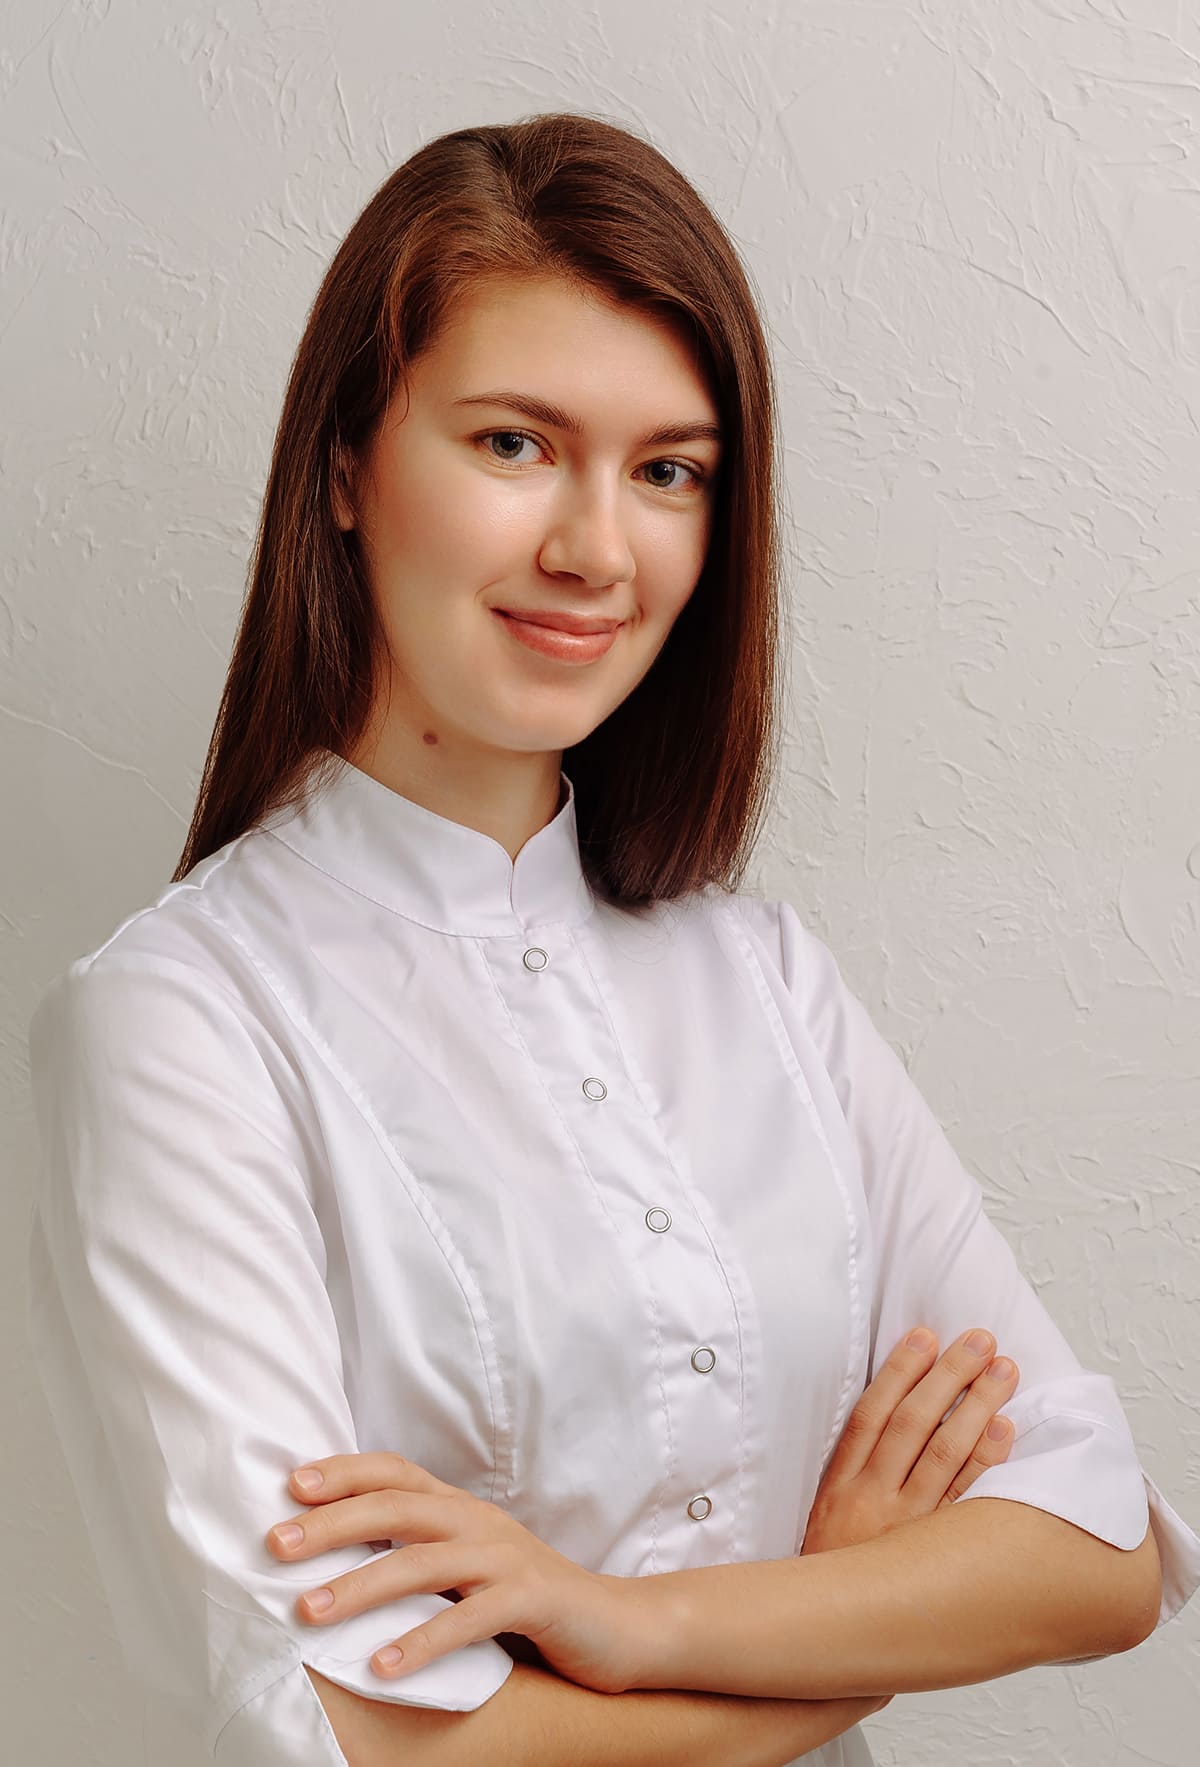 Суптелло Анастасия Андреевна